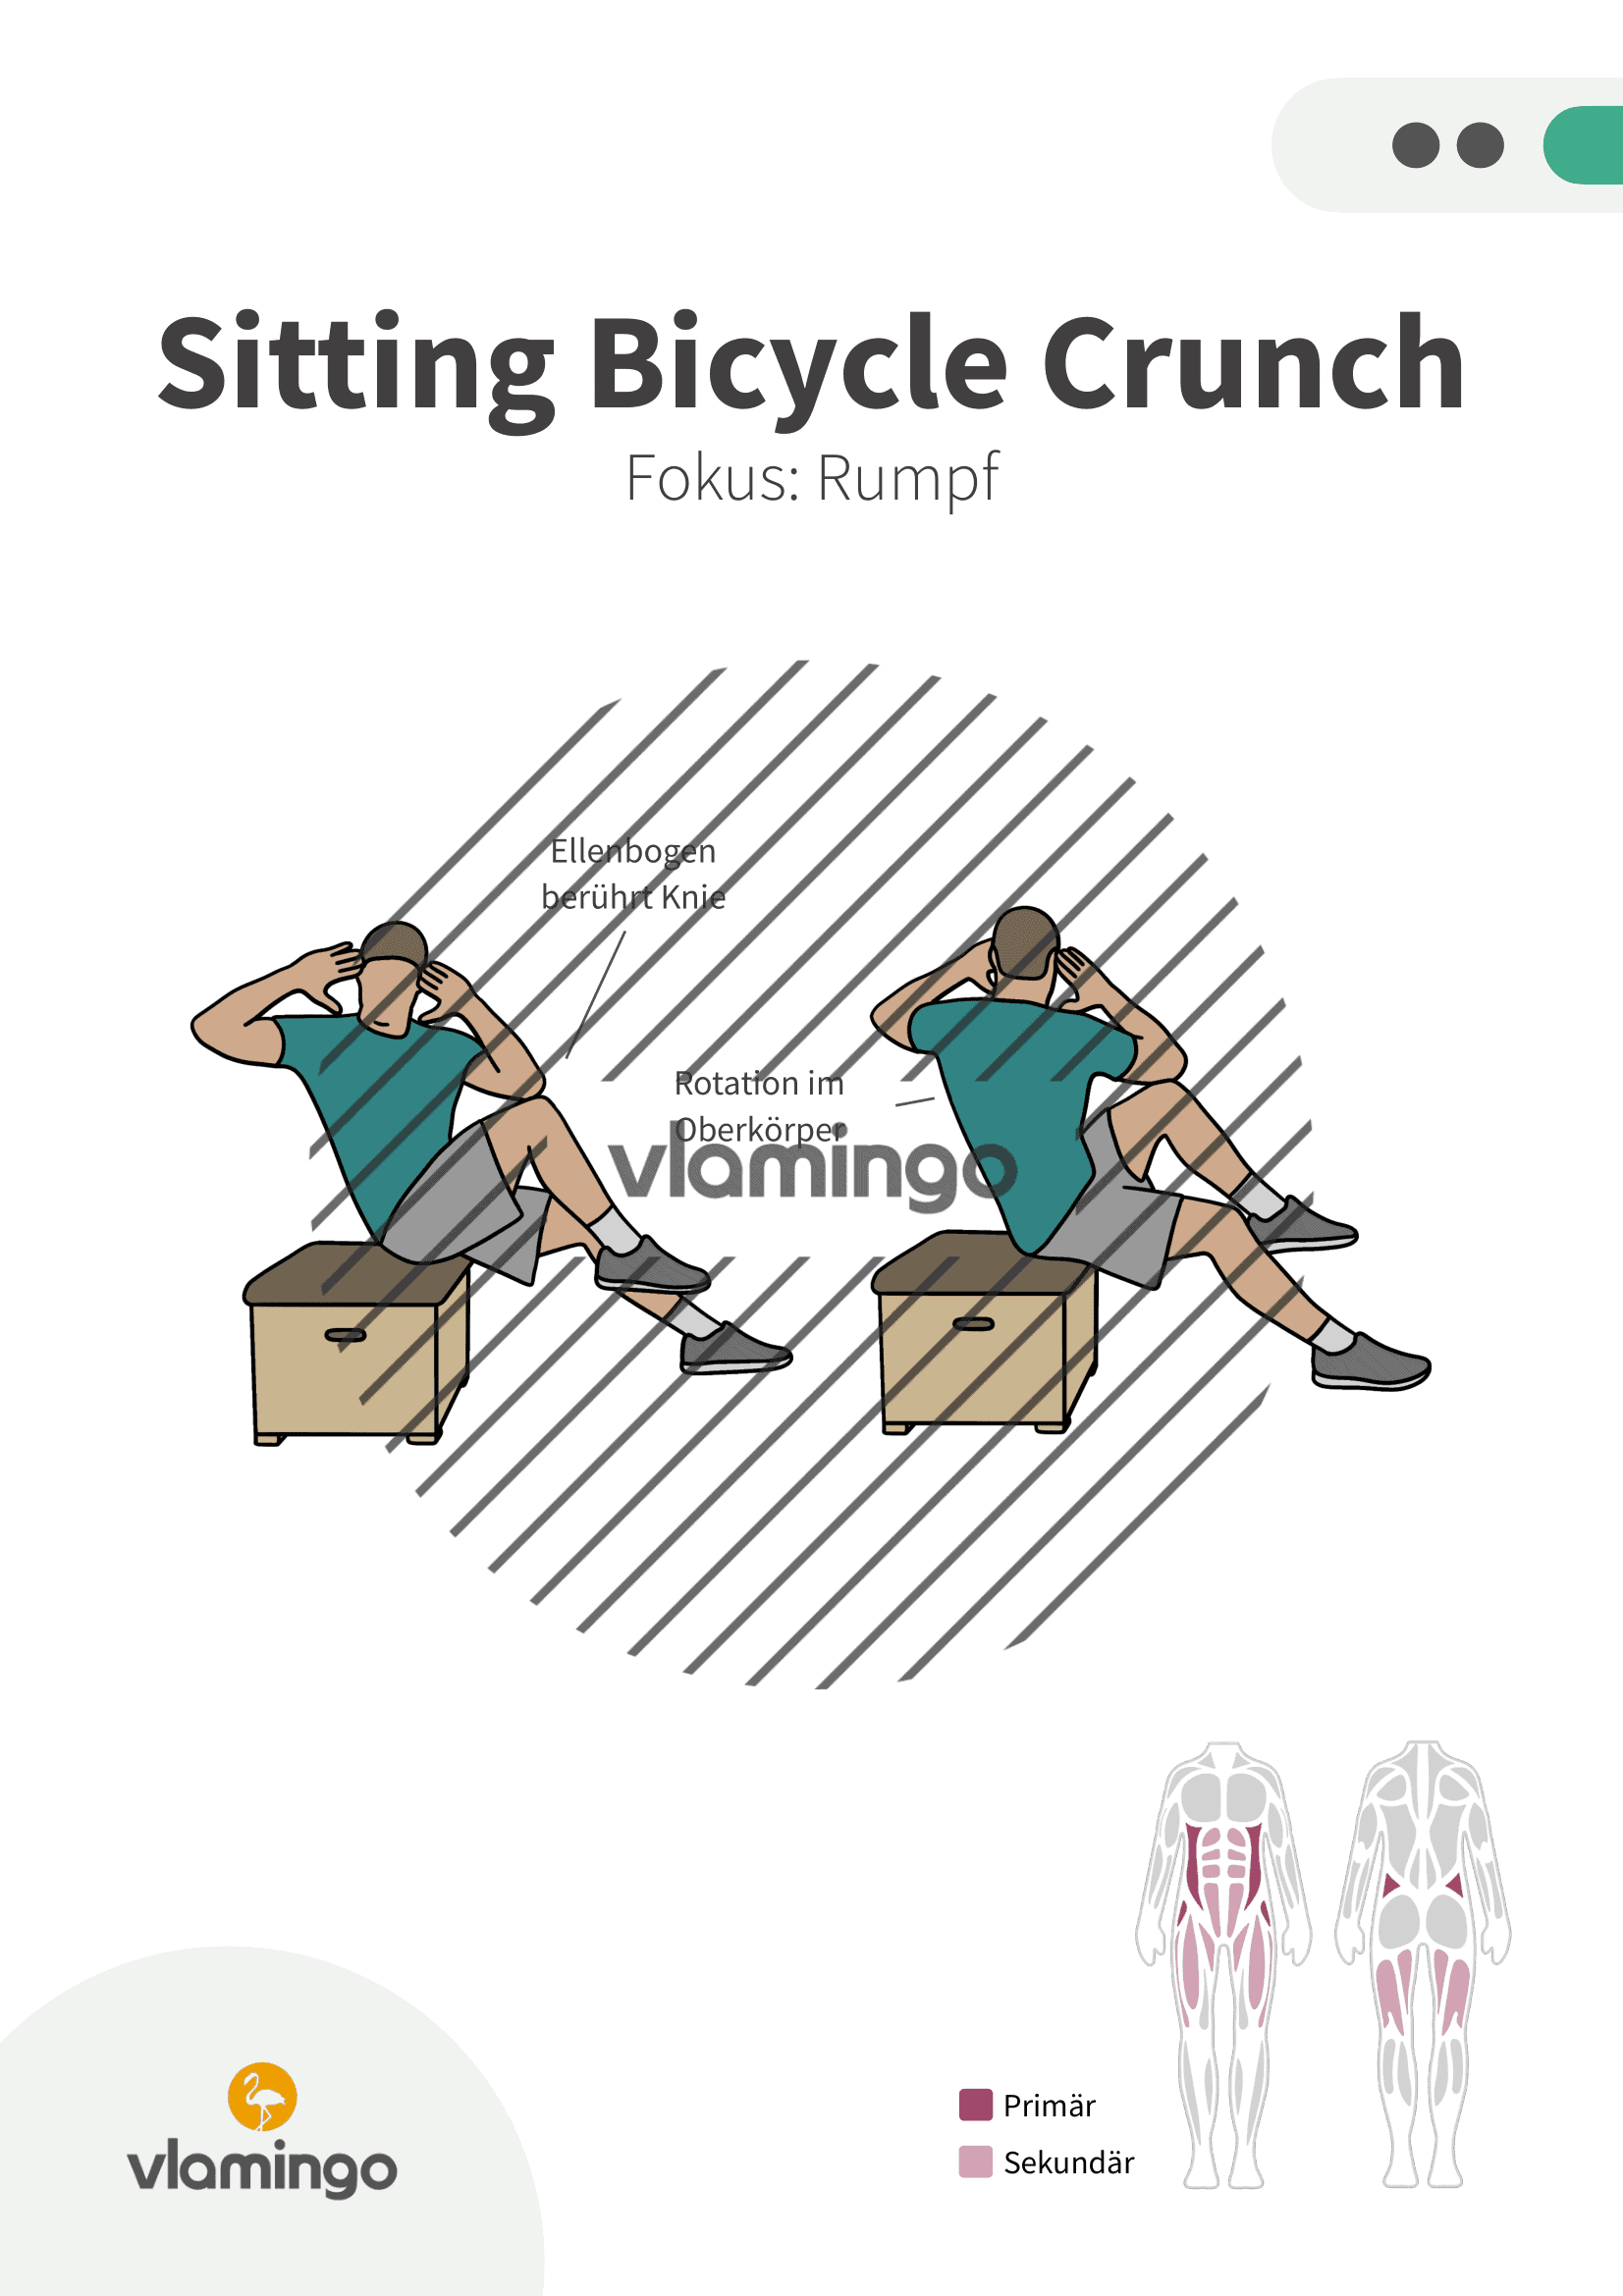 Übung - Sitting Bicycle Crunch - Fitness mit Kasten, Stuhl & Bank